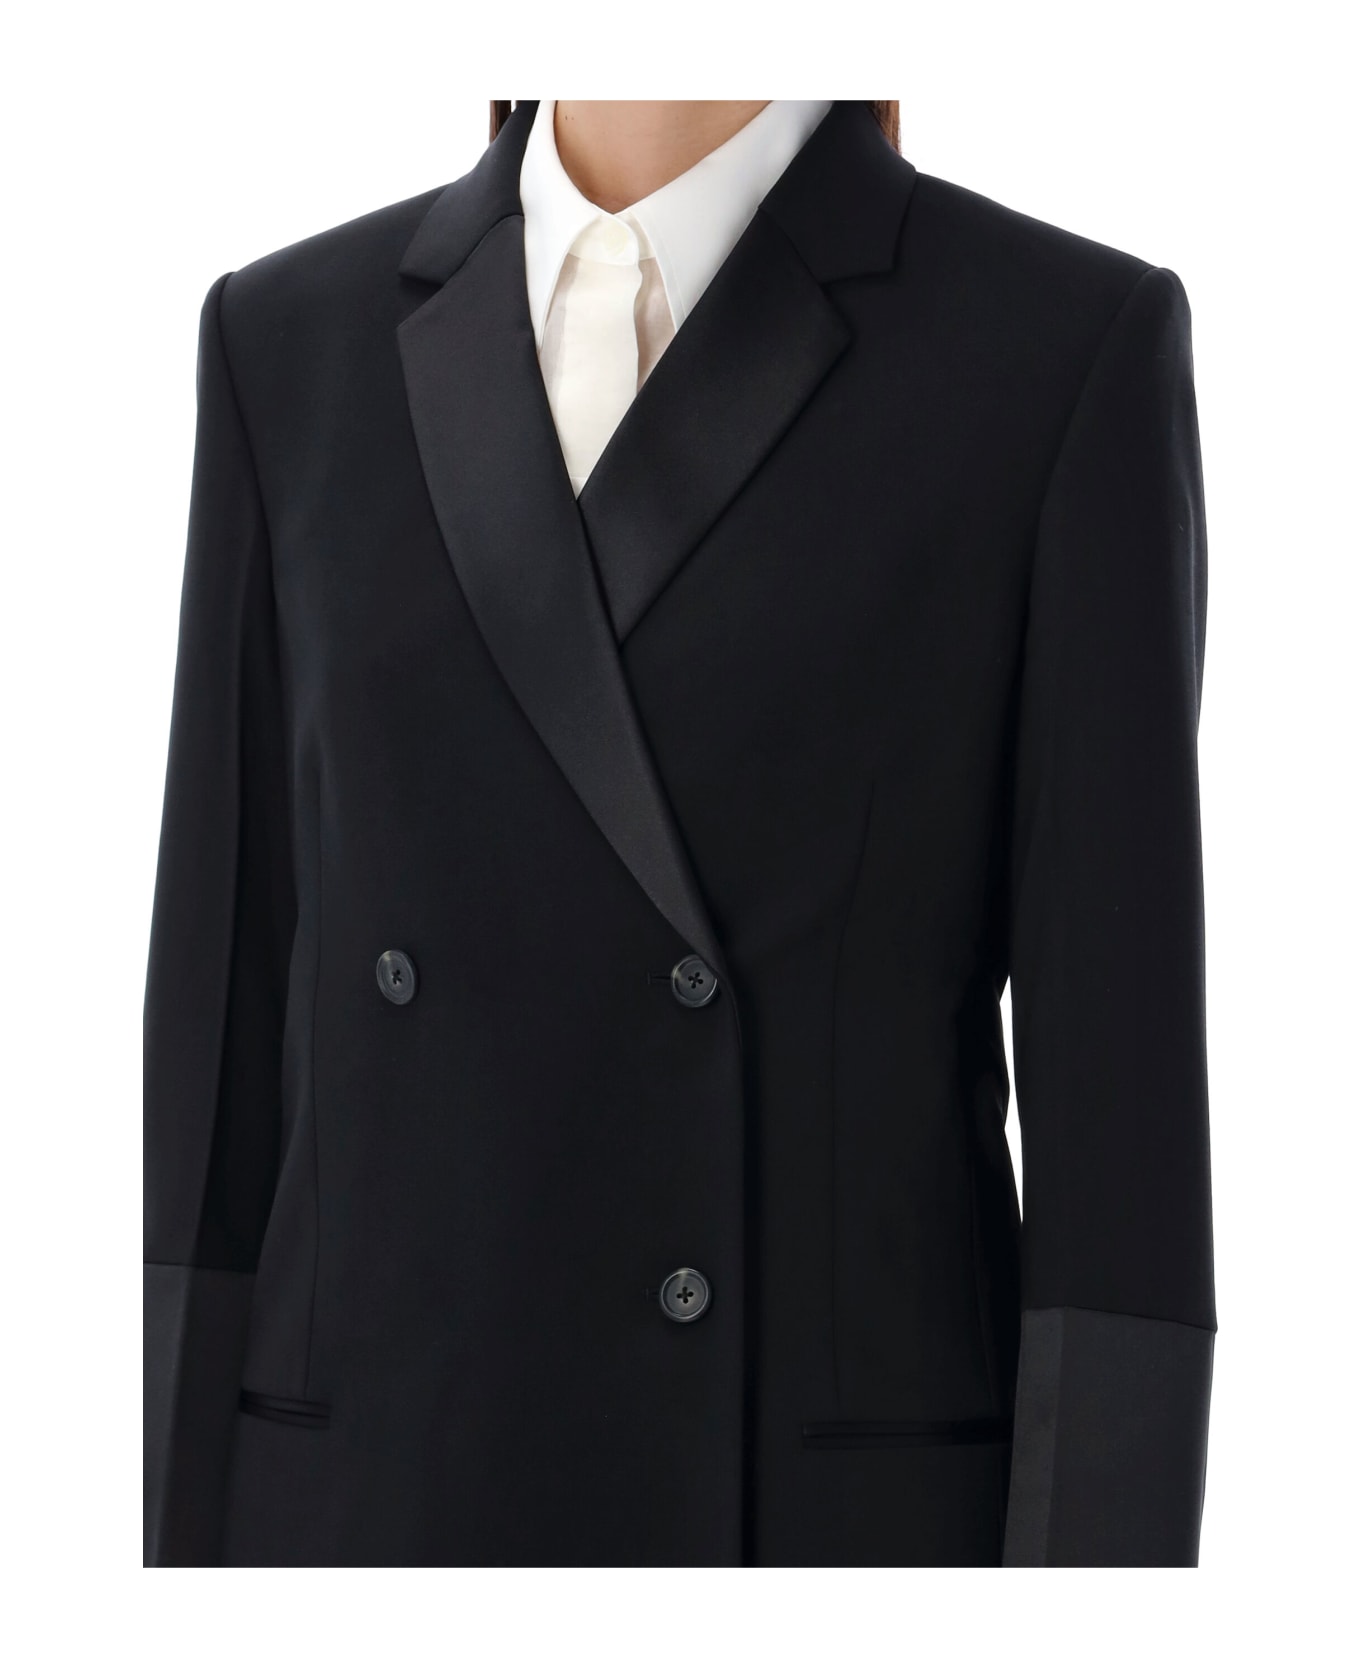 Helmut Lang Tuxedo Jacket - BLACK